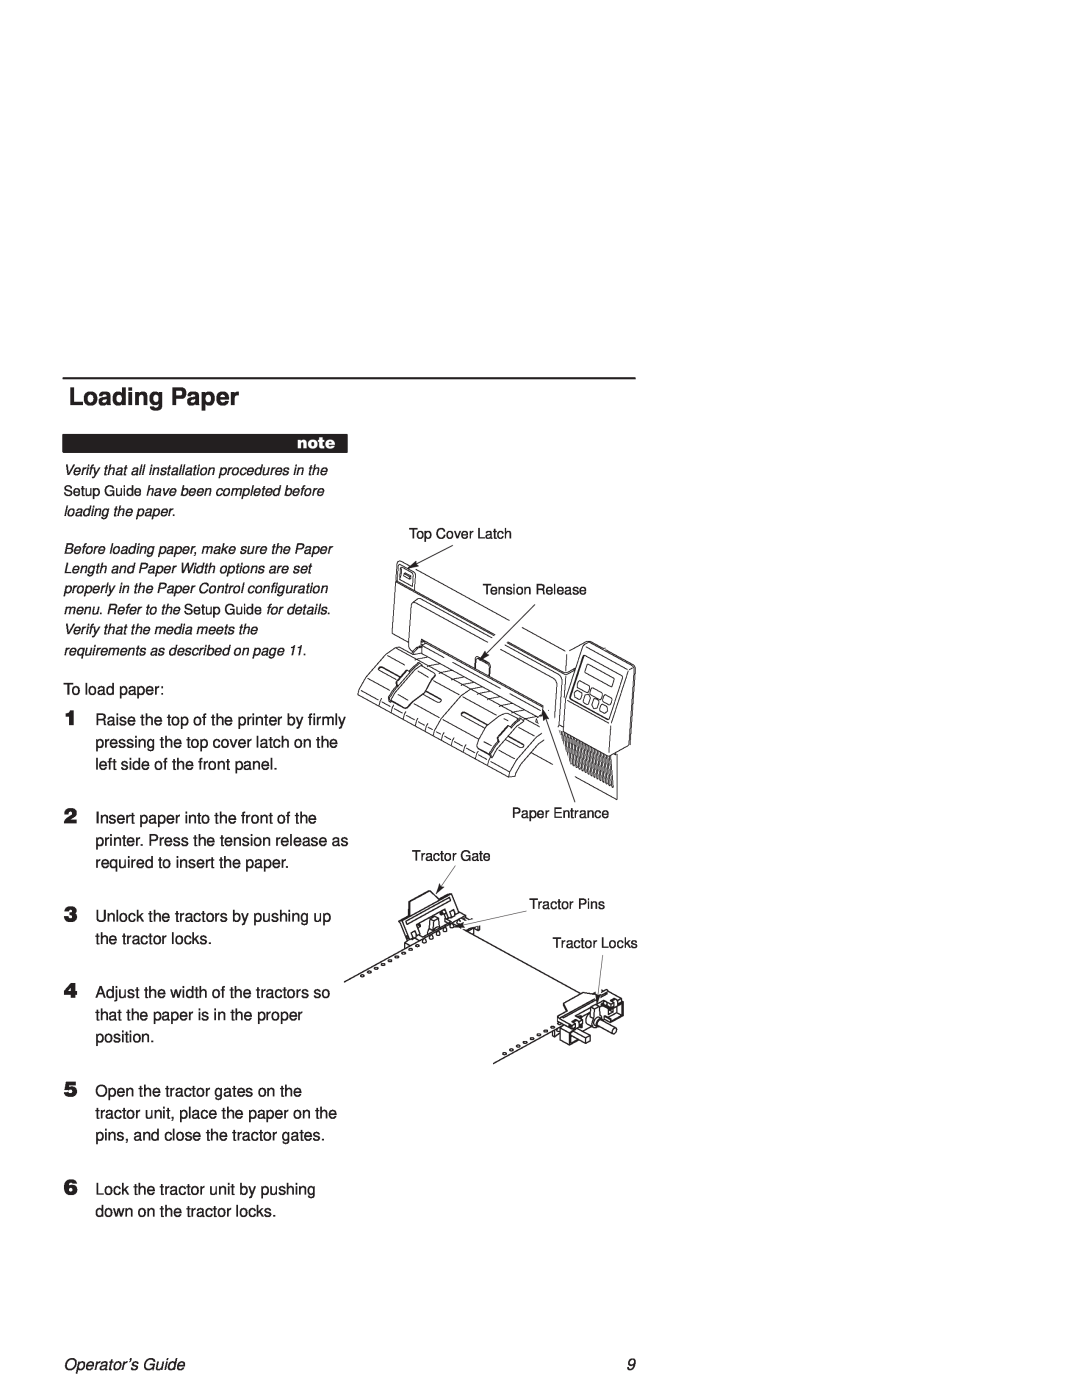 Printronix L1524 manual Loading Paper, Operators Guide 